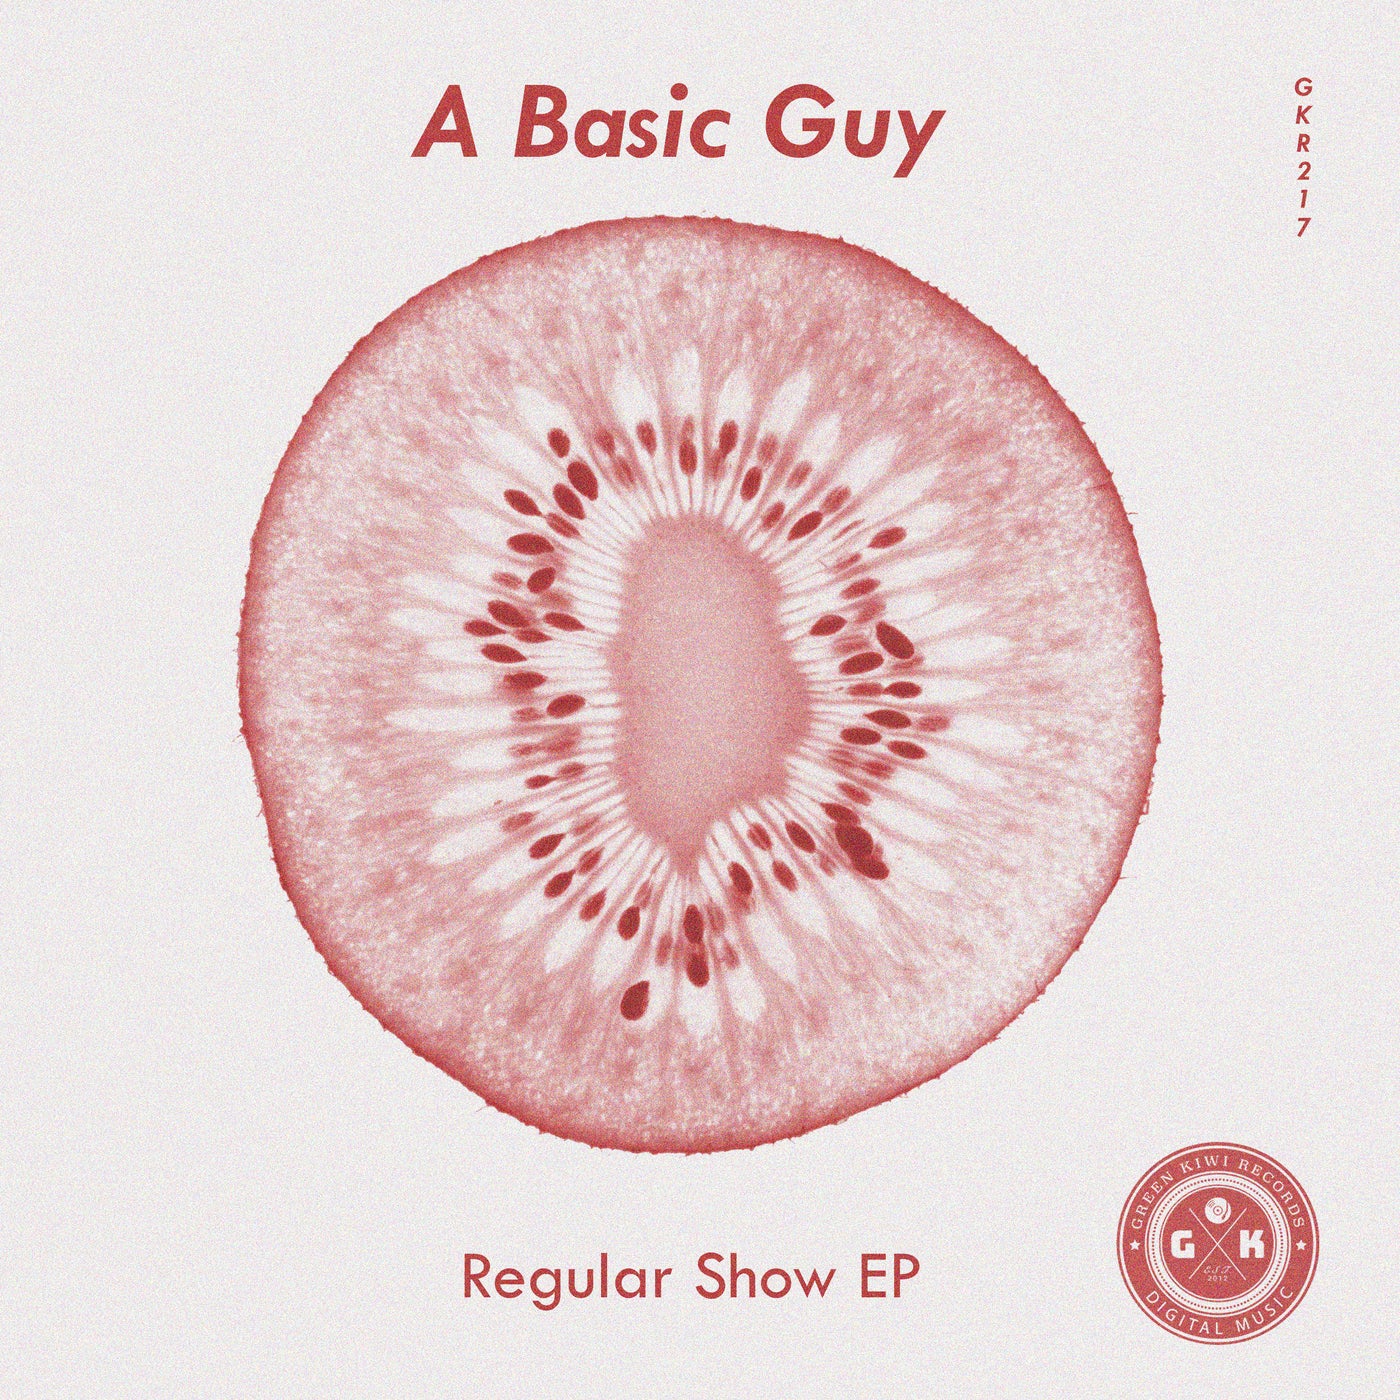 A Basic Guy – Regular Show EP [GKR217]